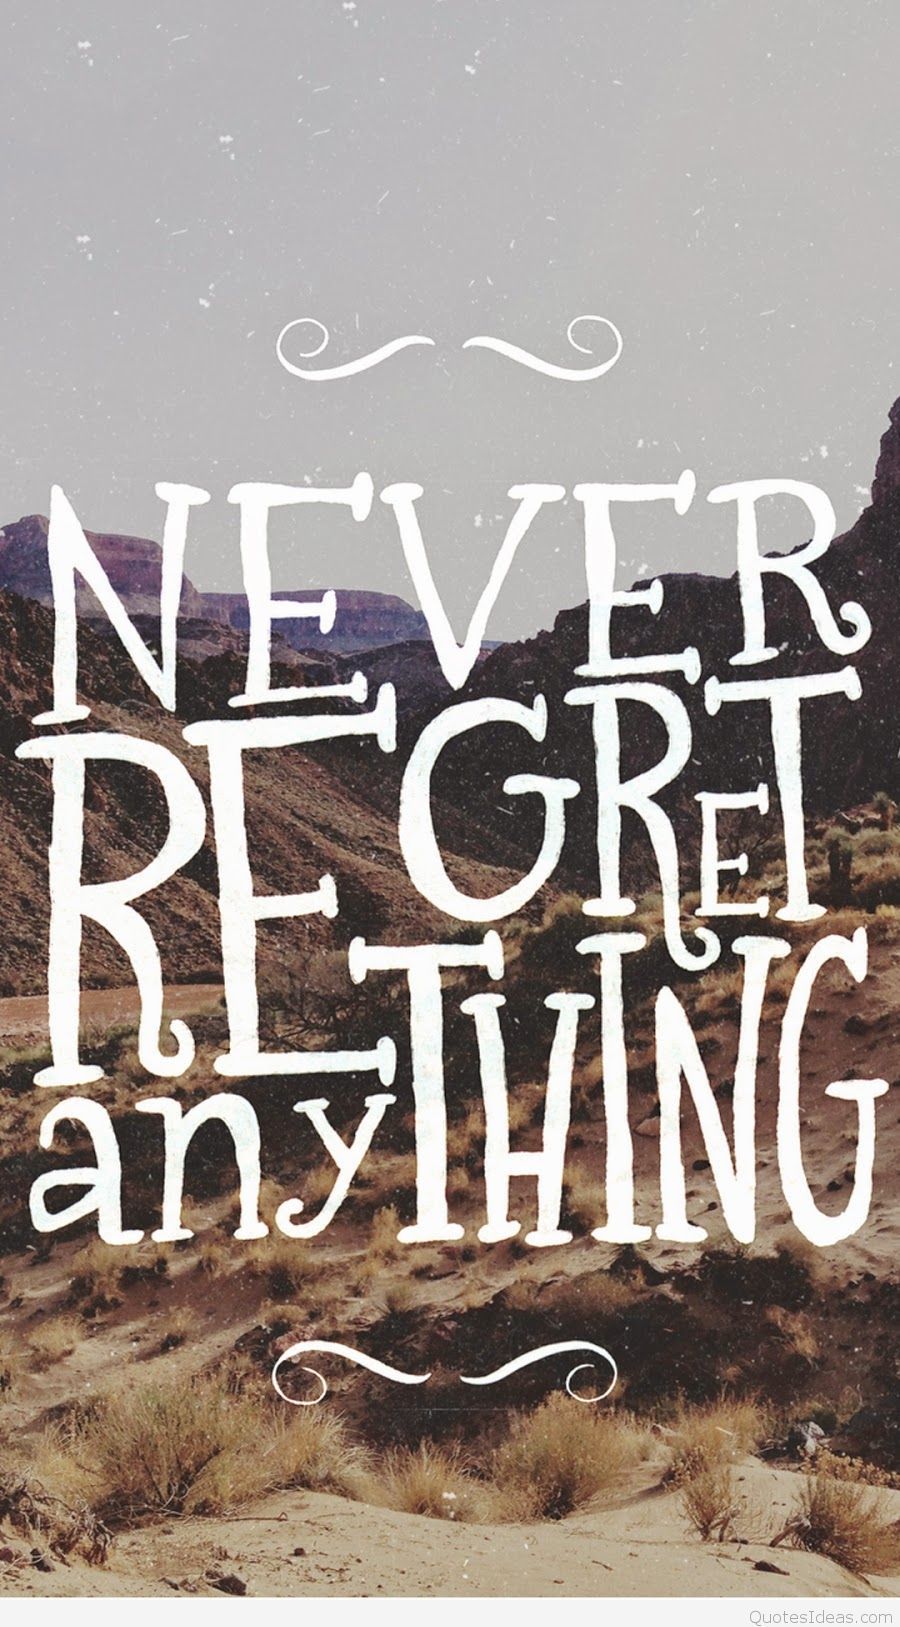 Never-Regret-Anything-iPhone-6-Plus-HD-Wallpaper.jpg